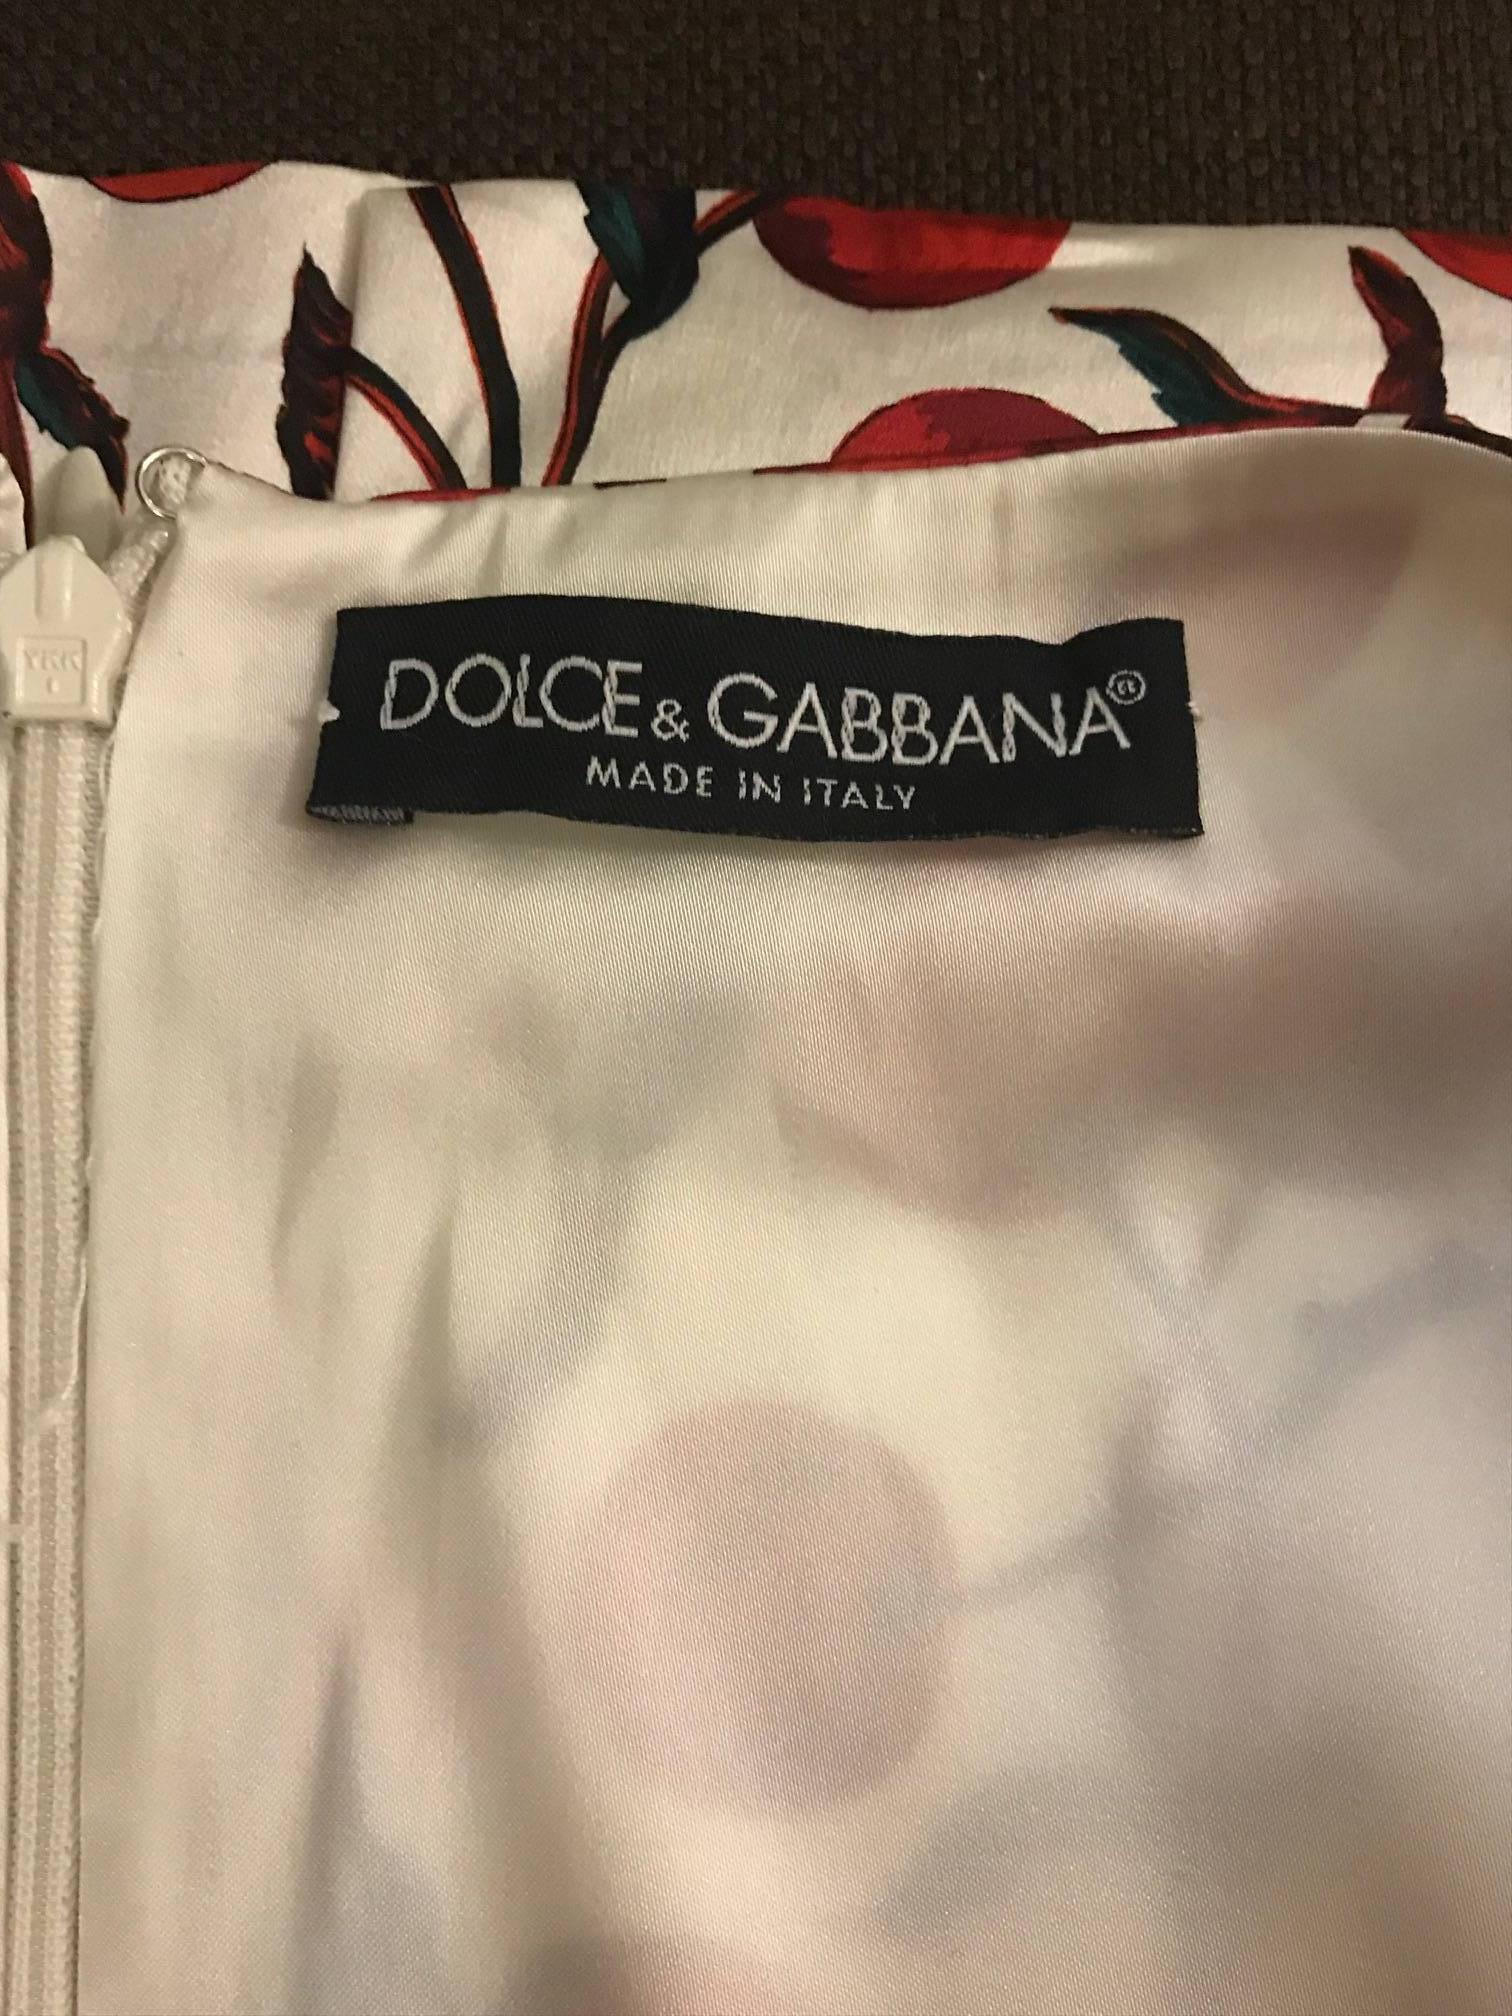 dolce and gabbana cherry dress